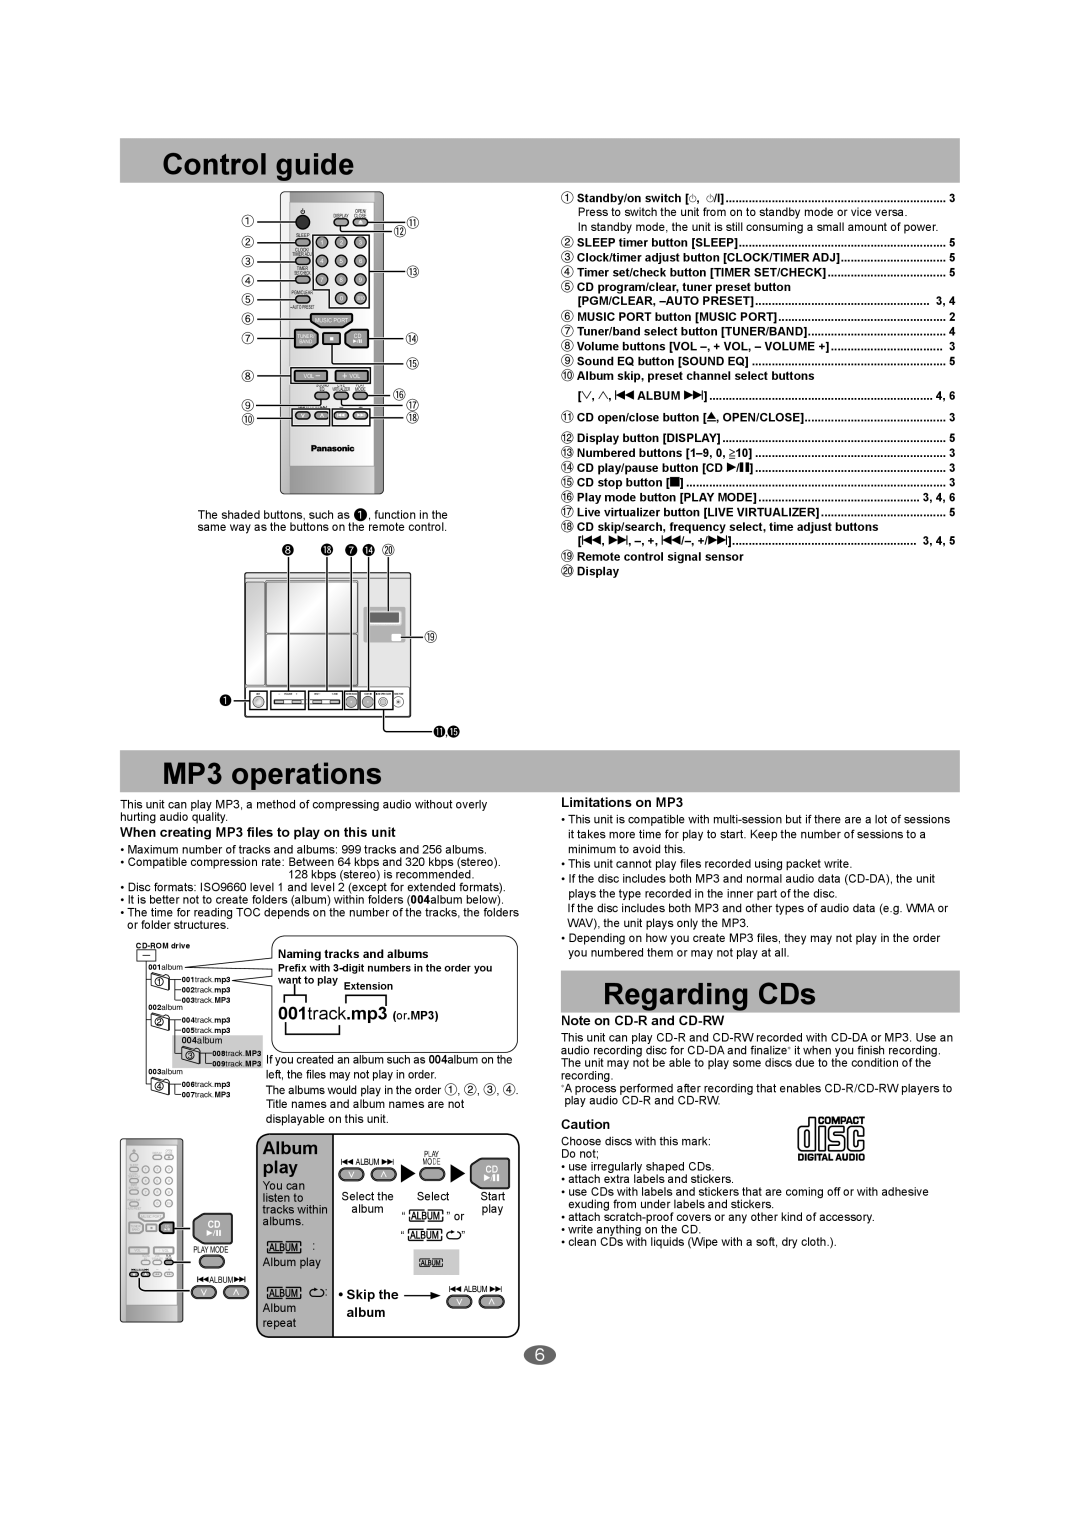 Panasonic SC-EN27 manual Control guide, MP3 operations, Regarding CDs, 001track.mp3 or.MP3, Album, play, Limitations on MP3 